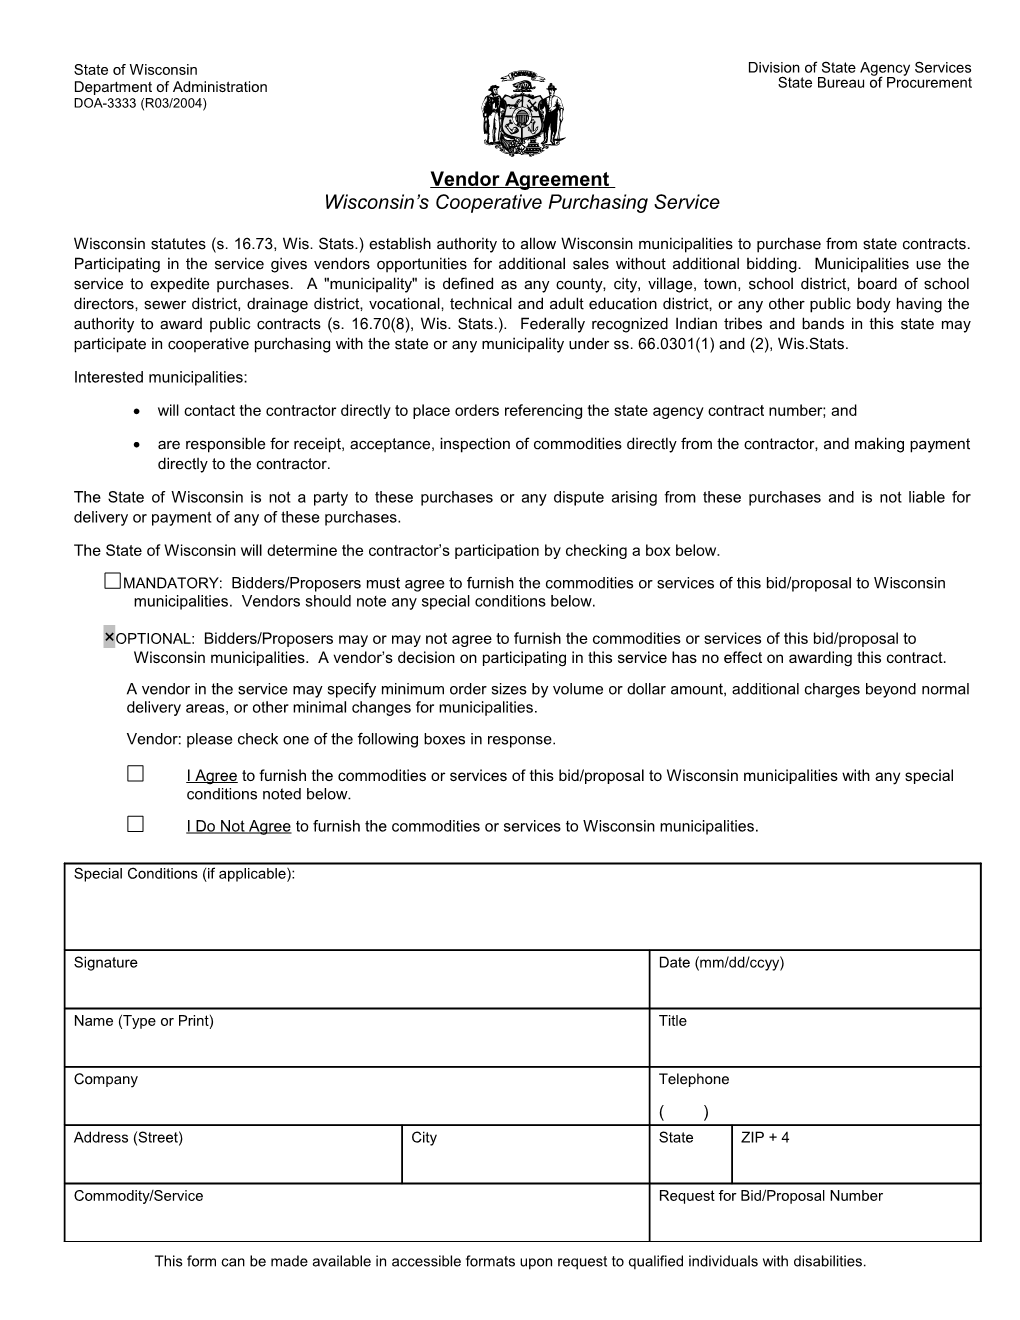 Vendor Agreement Form (DOA-3333)